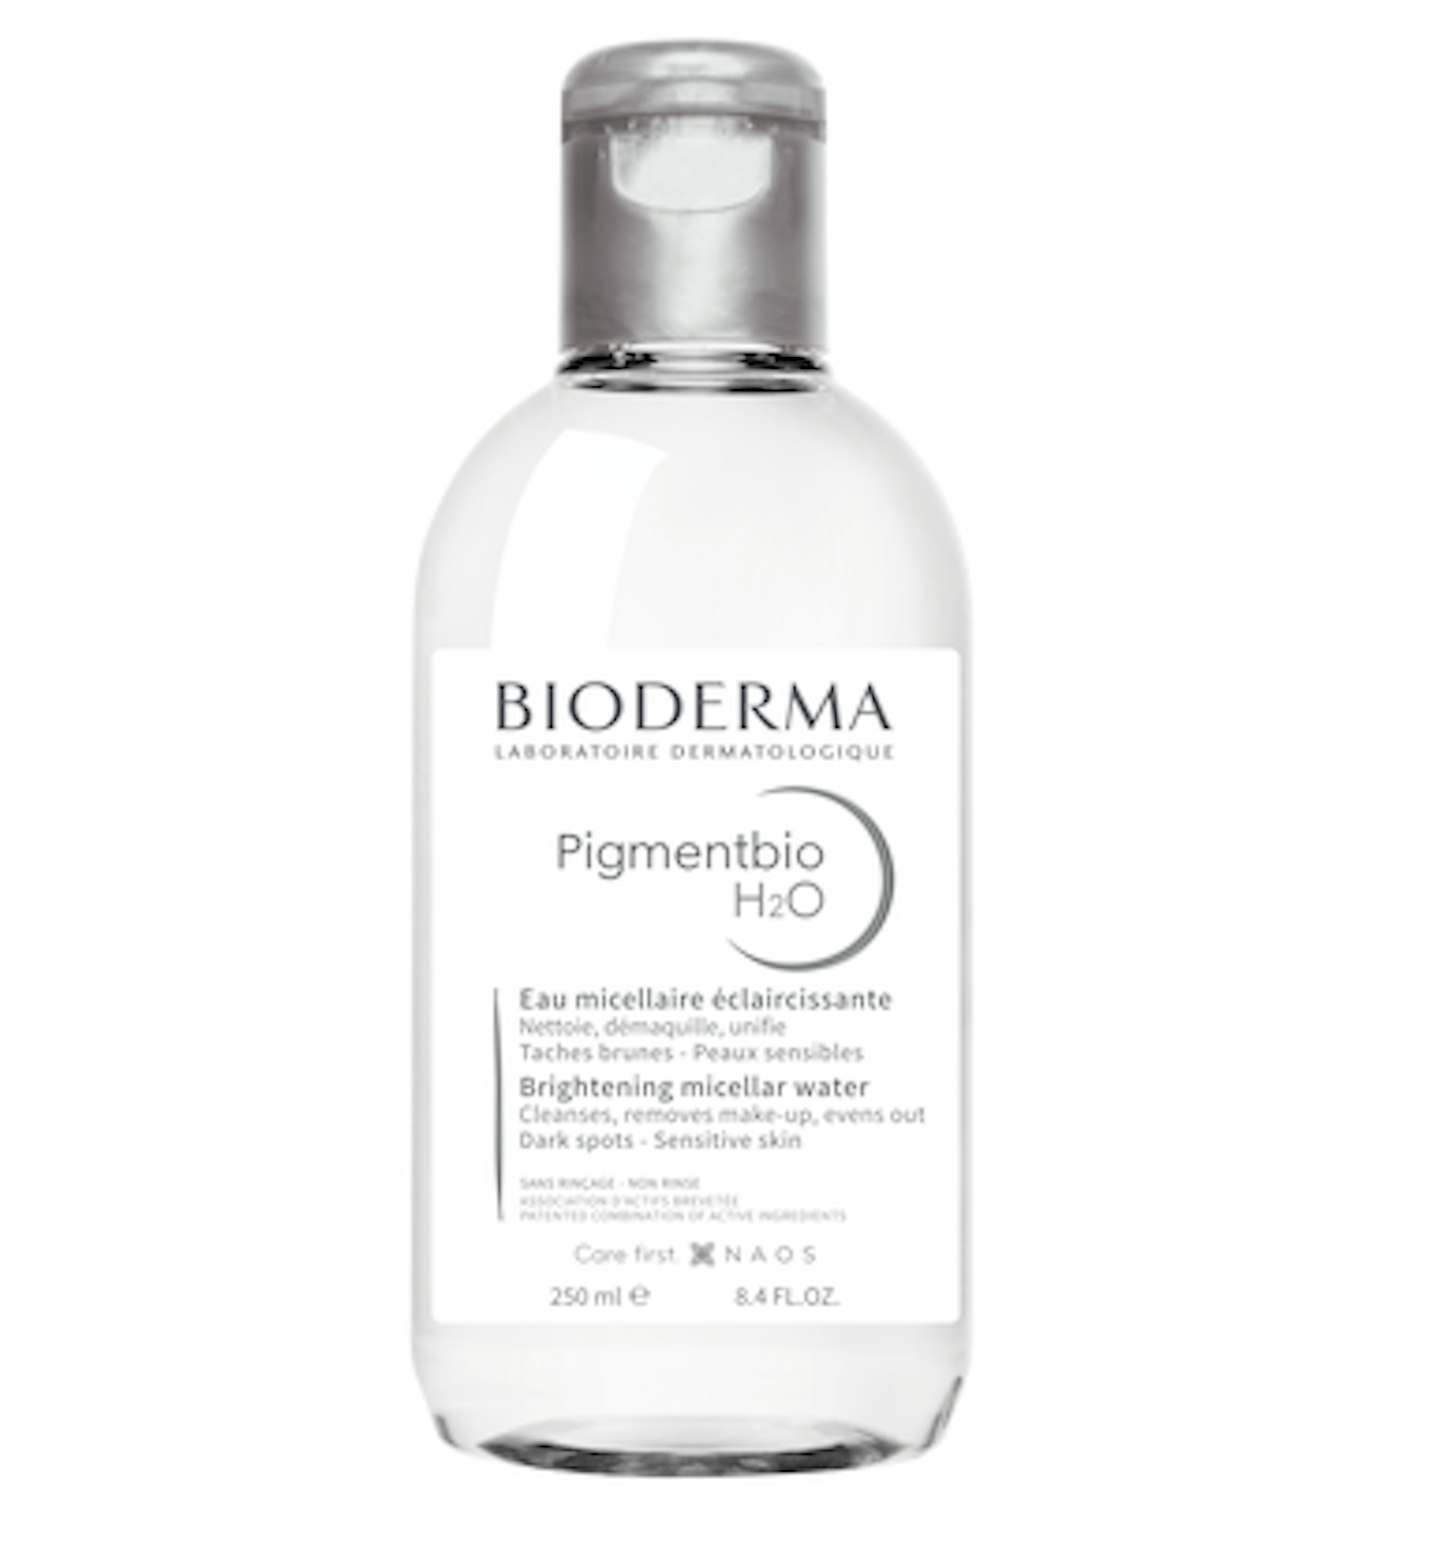 Bioderma Pigmentbio H2O Micellar Water, £10.80